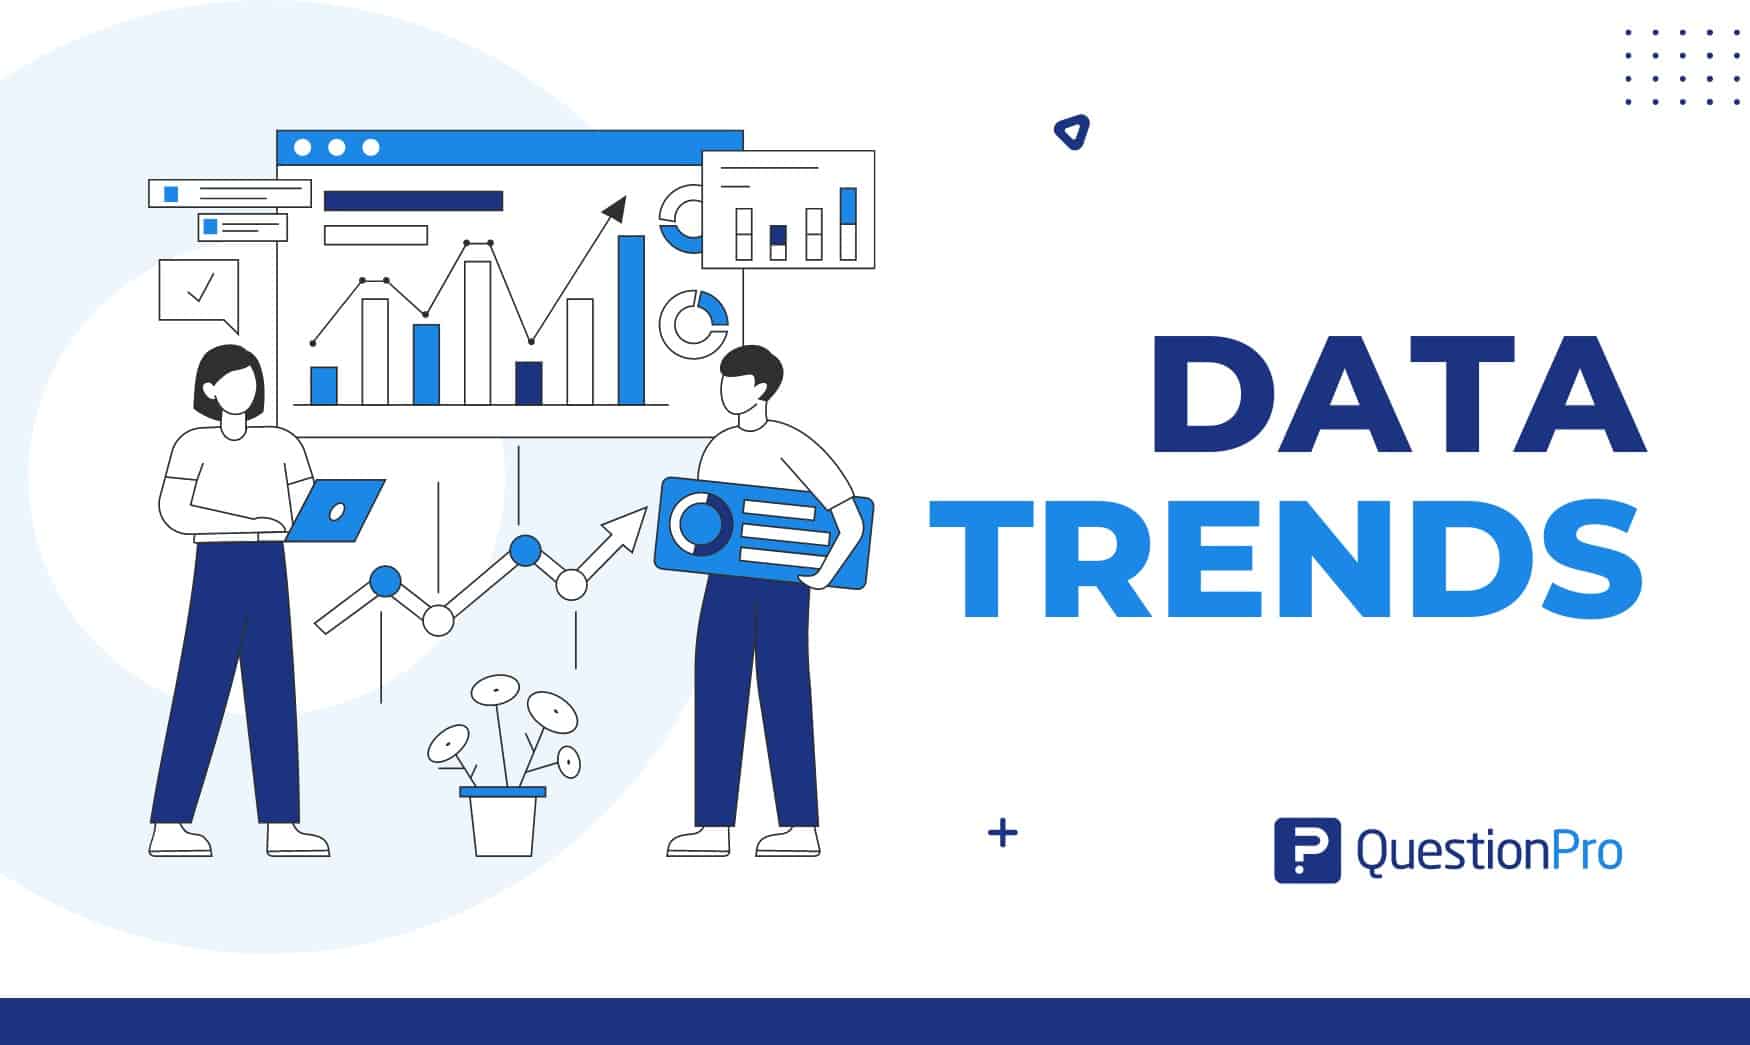 Data trends